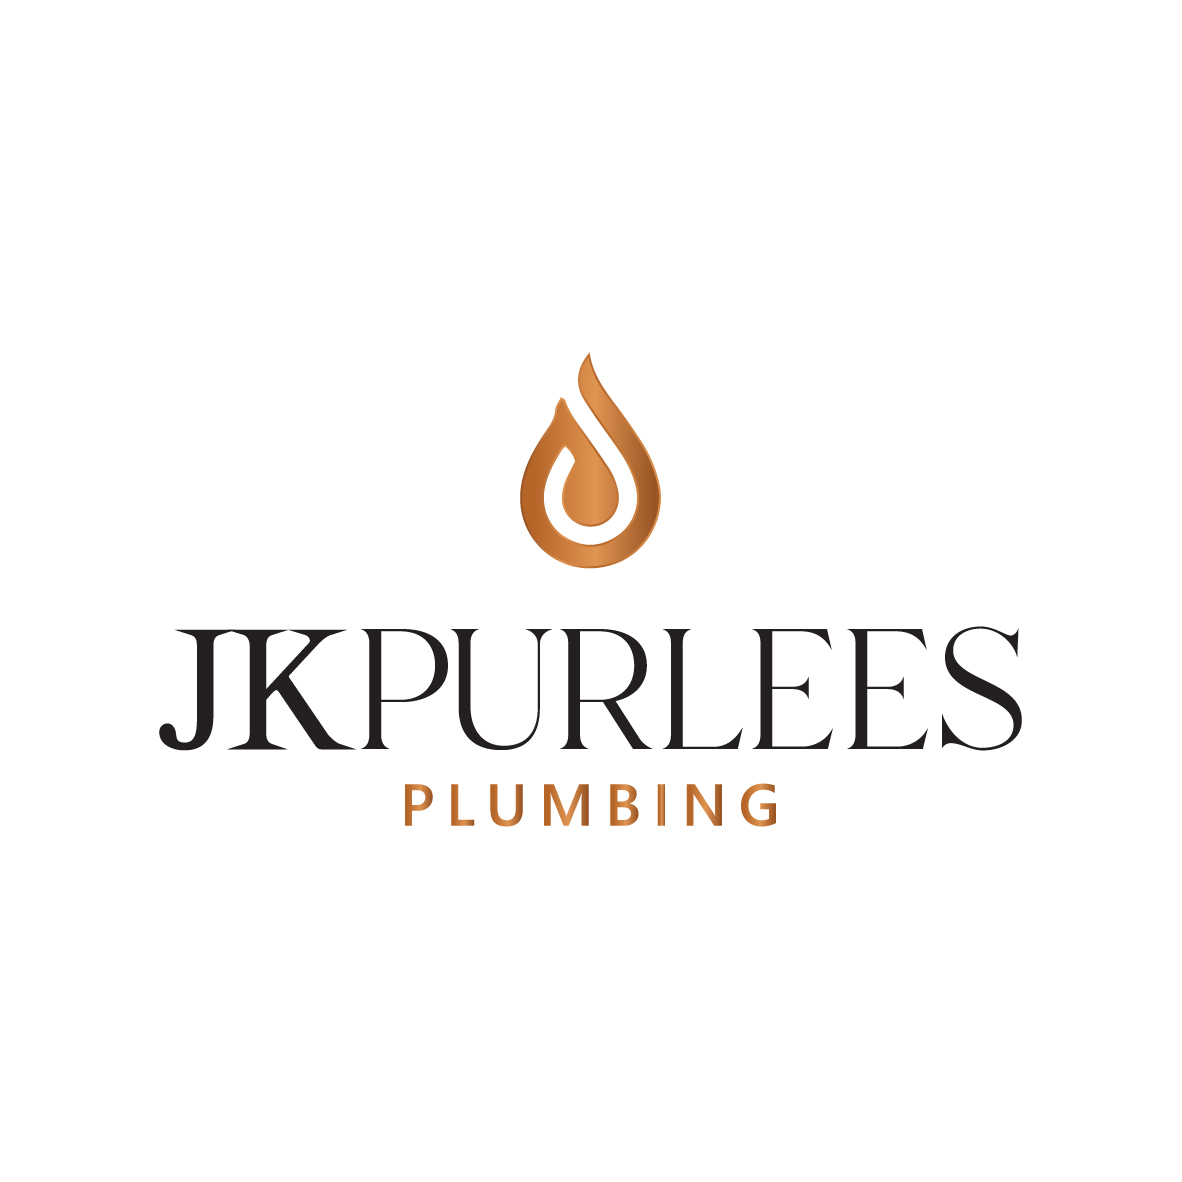 JK Purlees Plumbing Services Logo